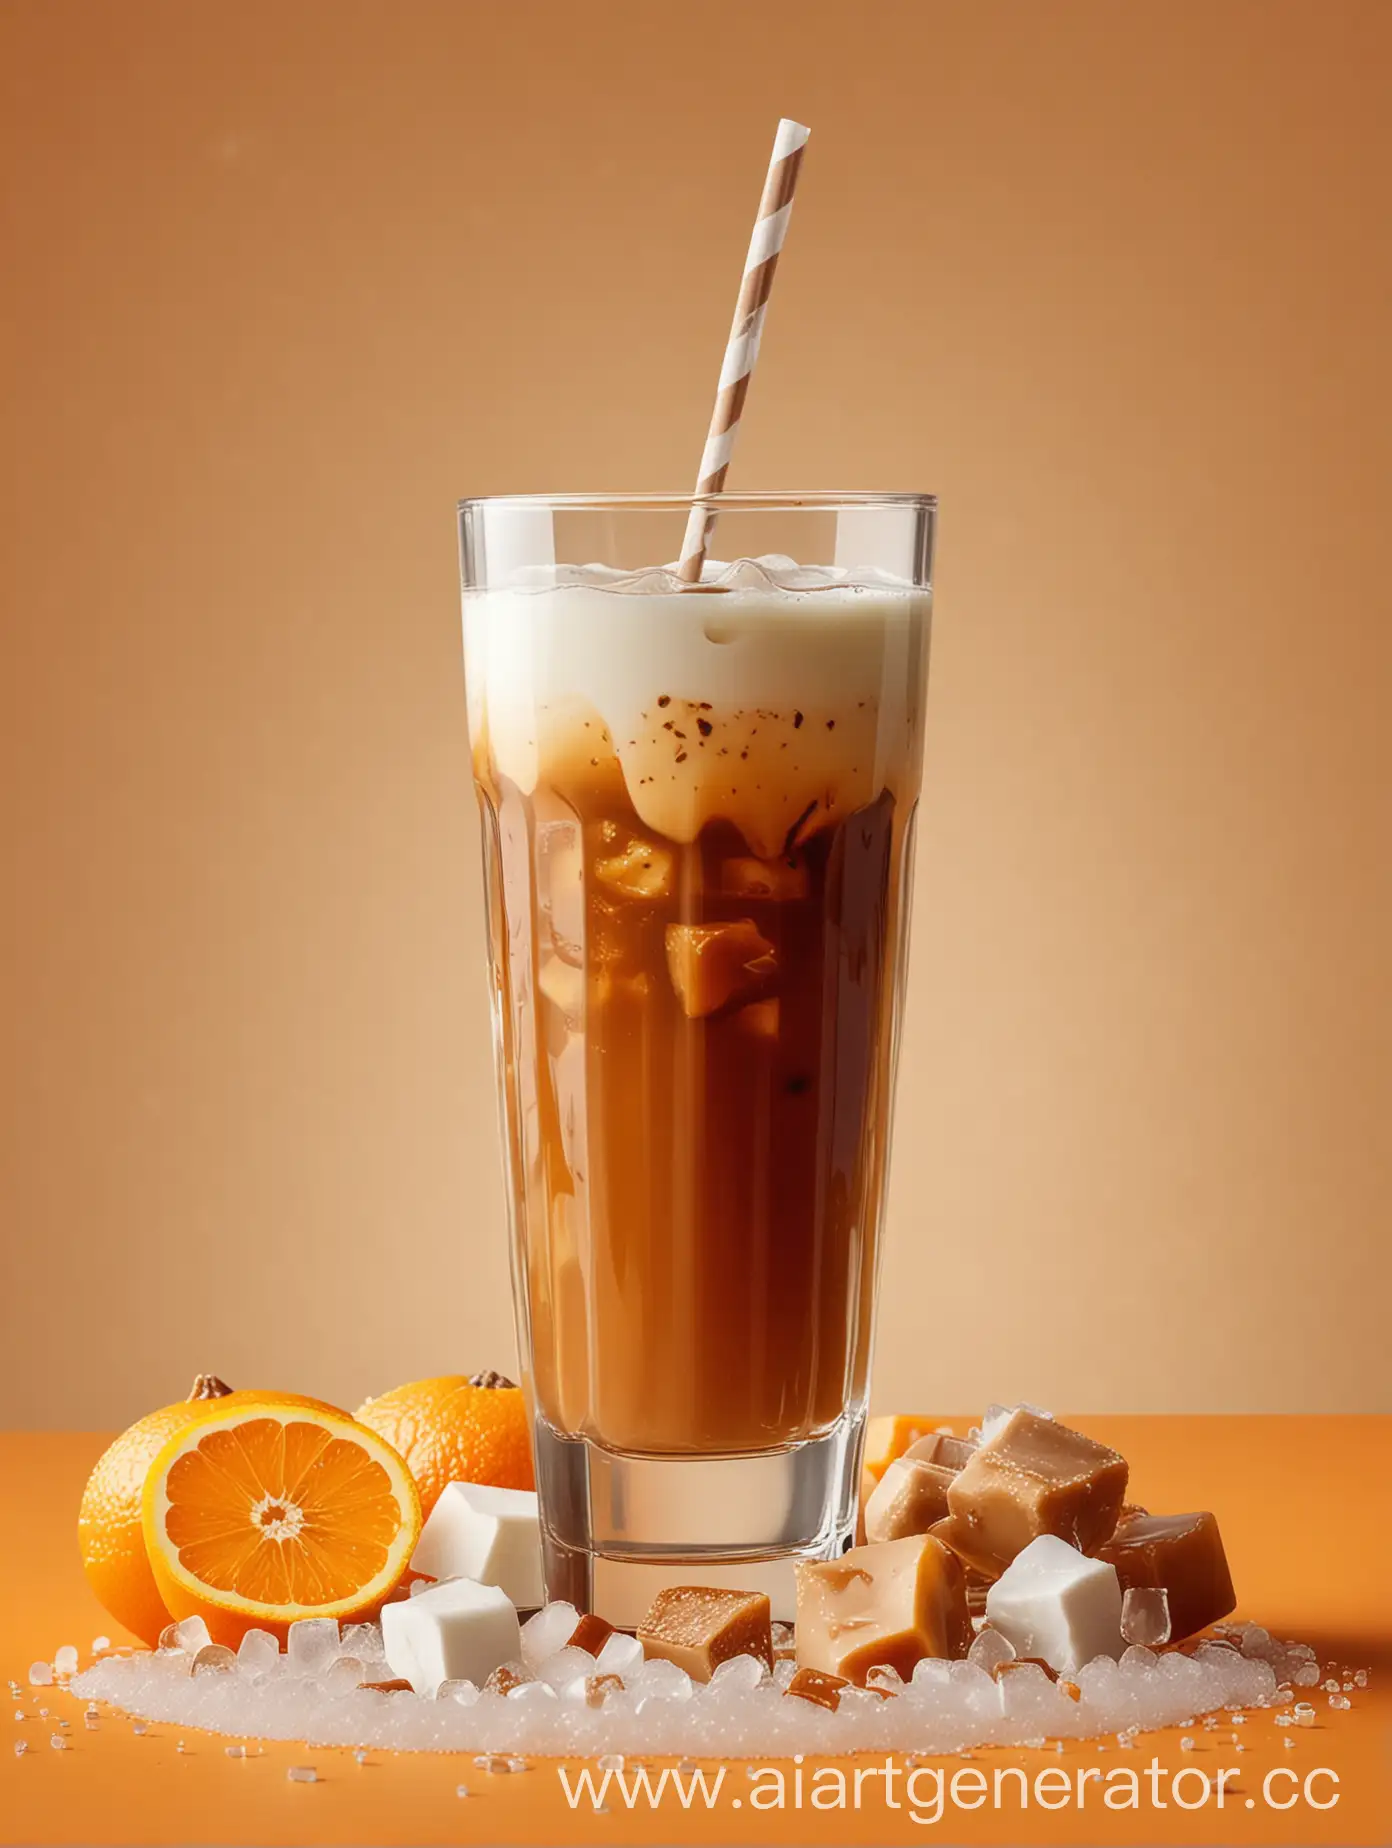 Refreshing-Caramel-Espresso-Drink-with-Sea-Salt-Garnish-on-Orange-Background